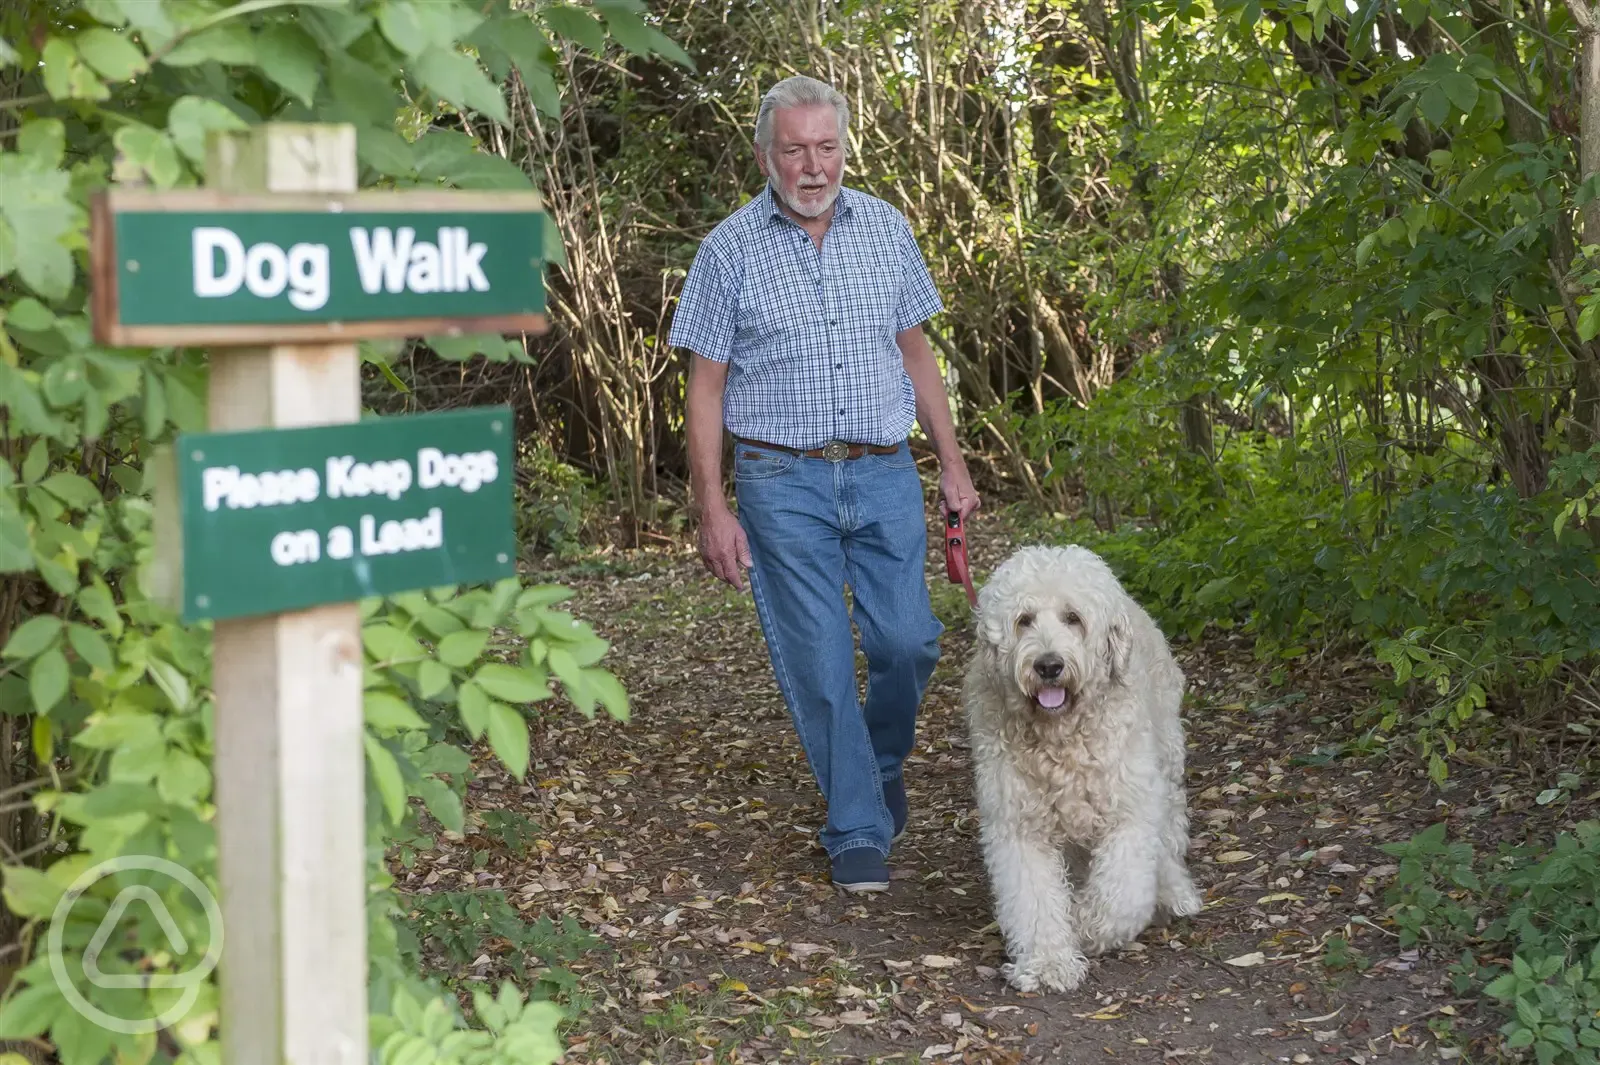 Enjoy one of the dog walking trails